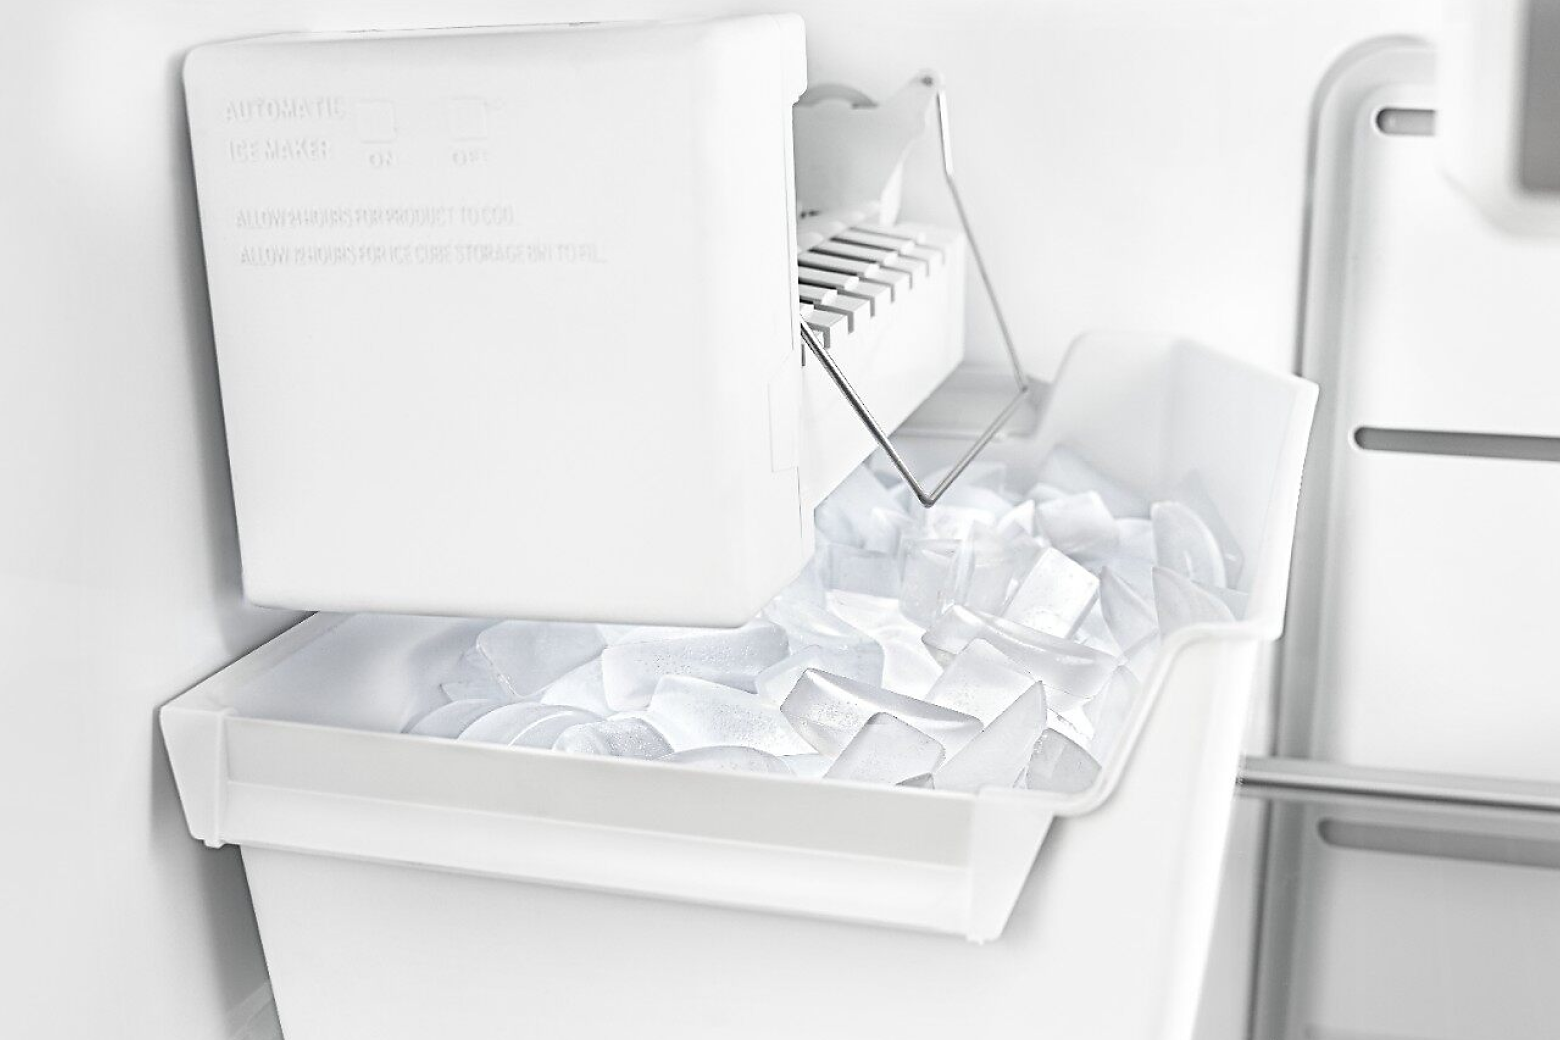 Lg Bottom Freezer Ice Maker Not Dumping Ice: Troubleshooting Guide